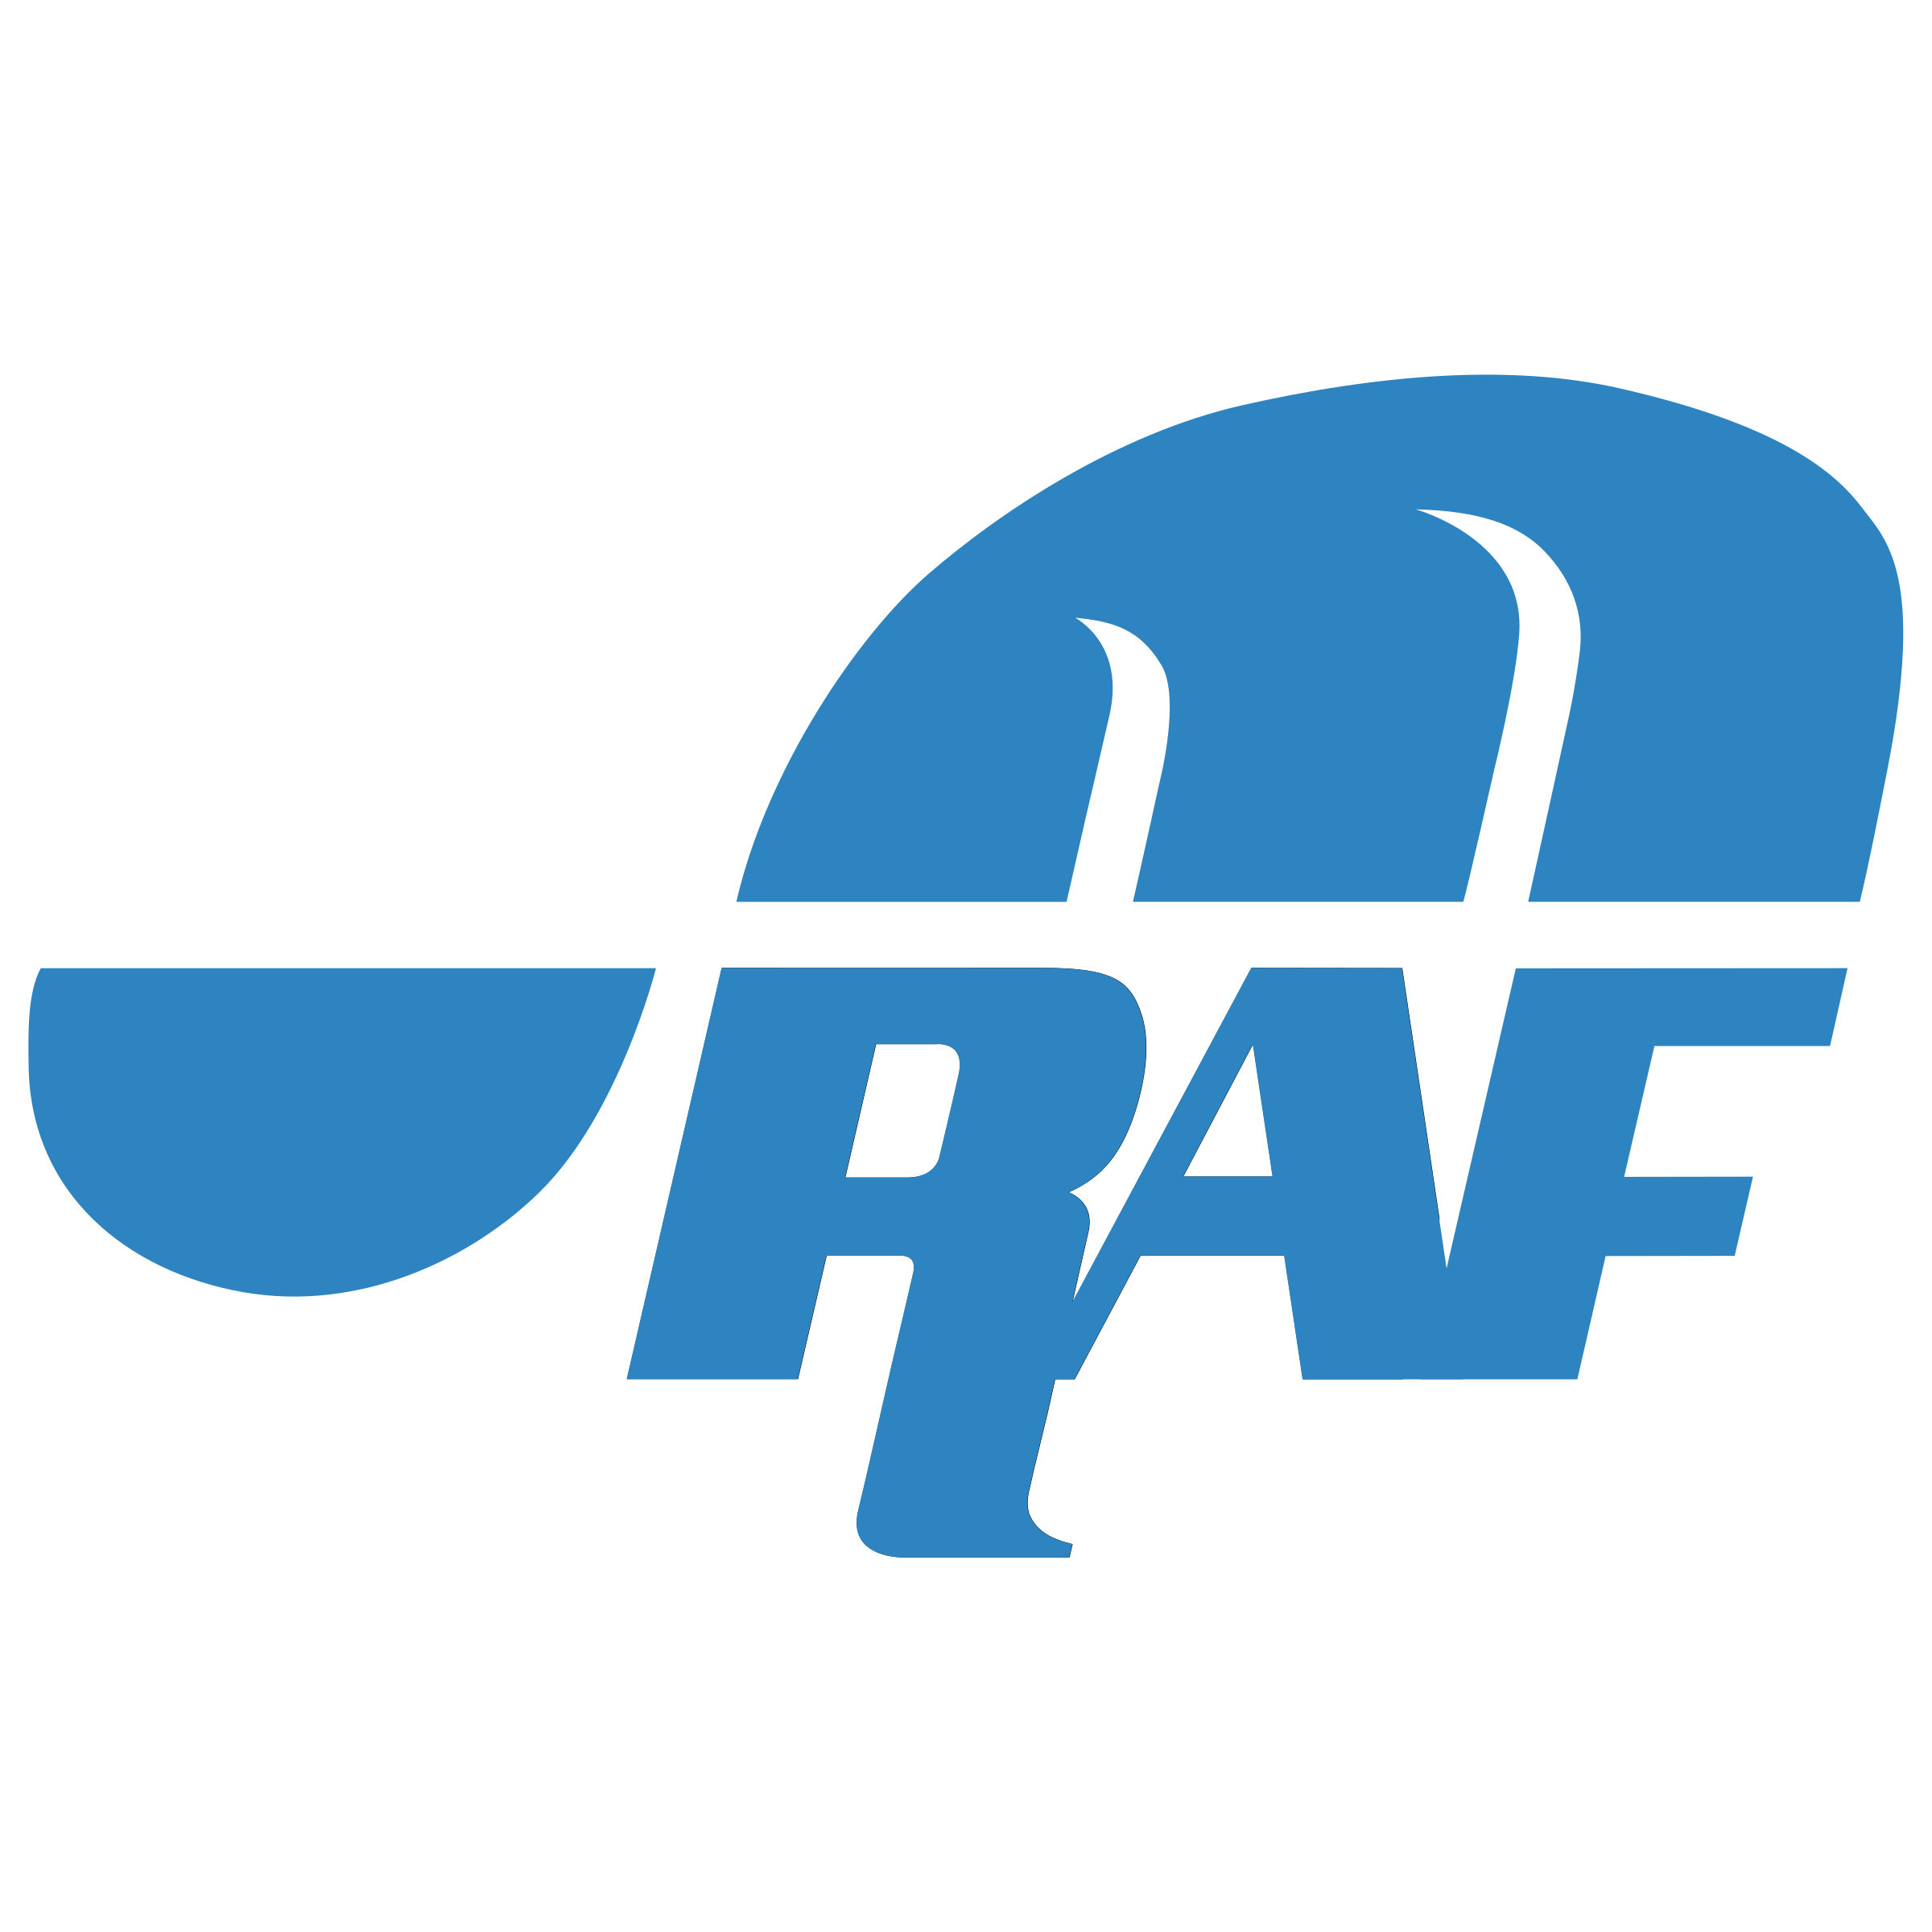 RAF Logo - RAF Logo PNG Transparent & SVG Vector - Freebie Supply